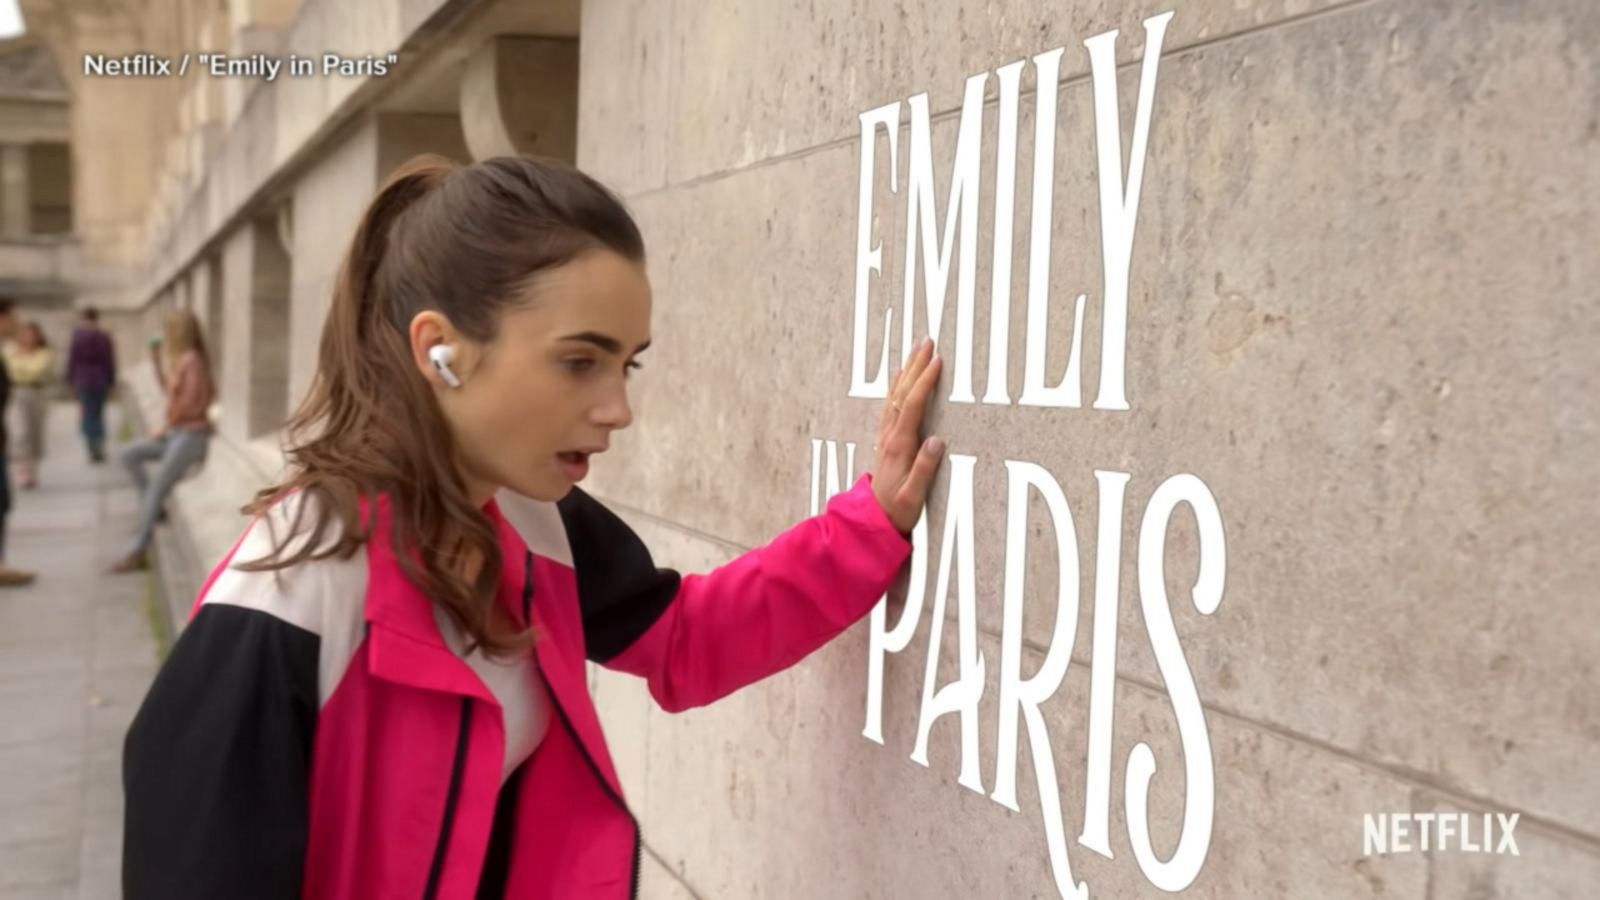 1st look at new season of 'Emily in Paris' - Good Morning America